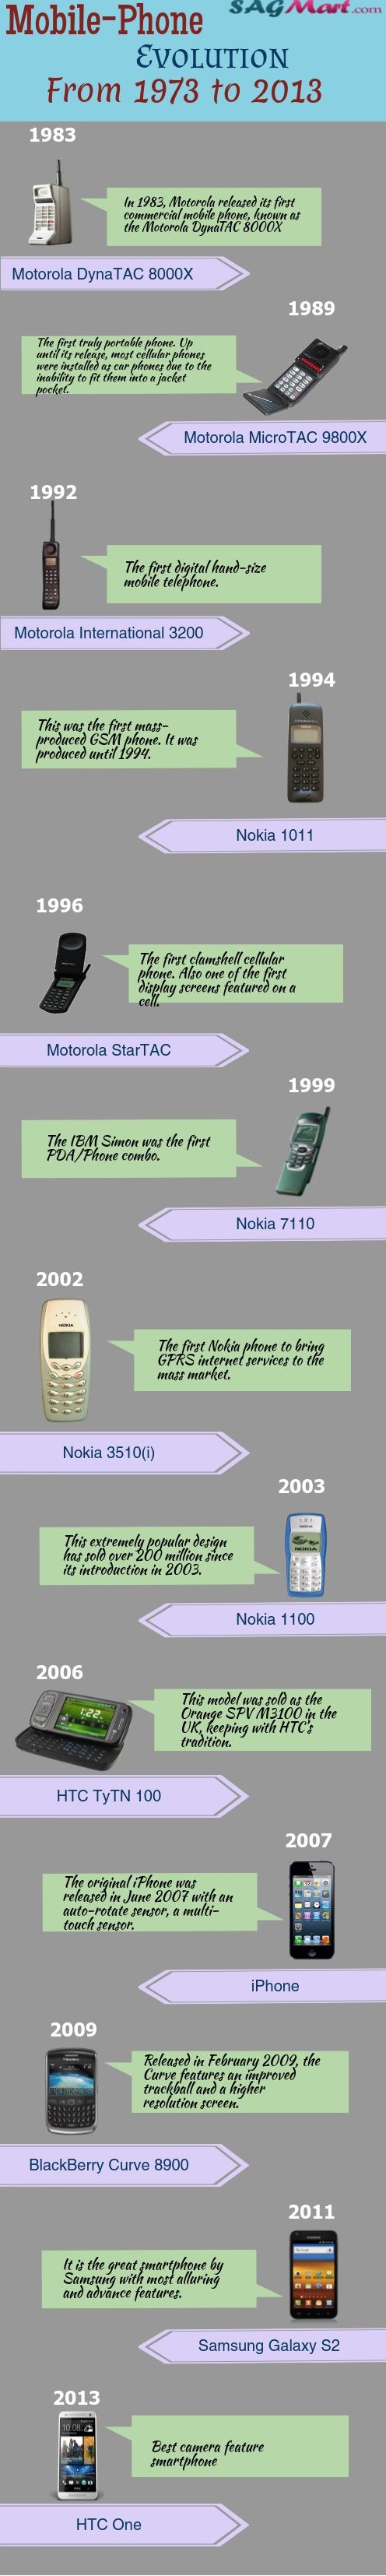 Mobile-phone Evolution.1